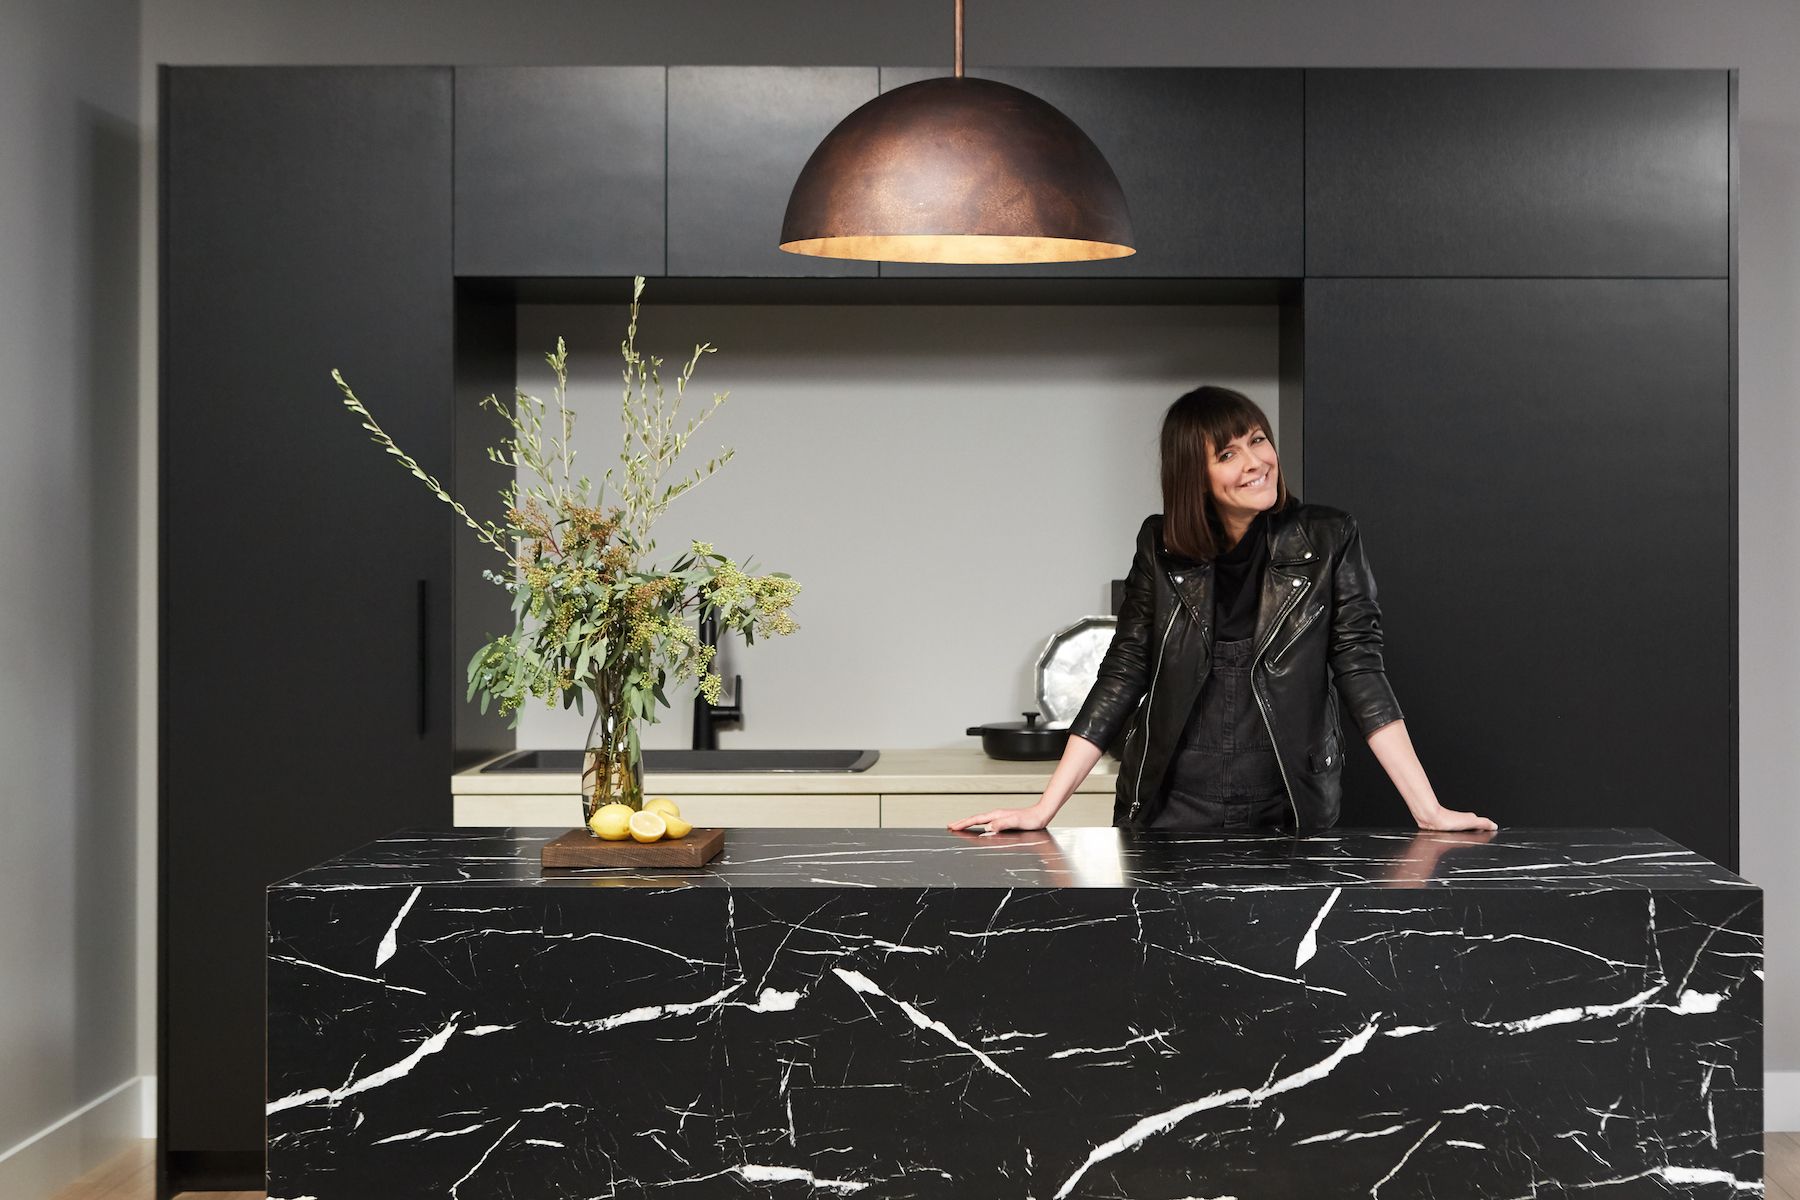 Siyah Formica tezgah, mutfakta tasarımcı Leanne Ford